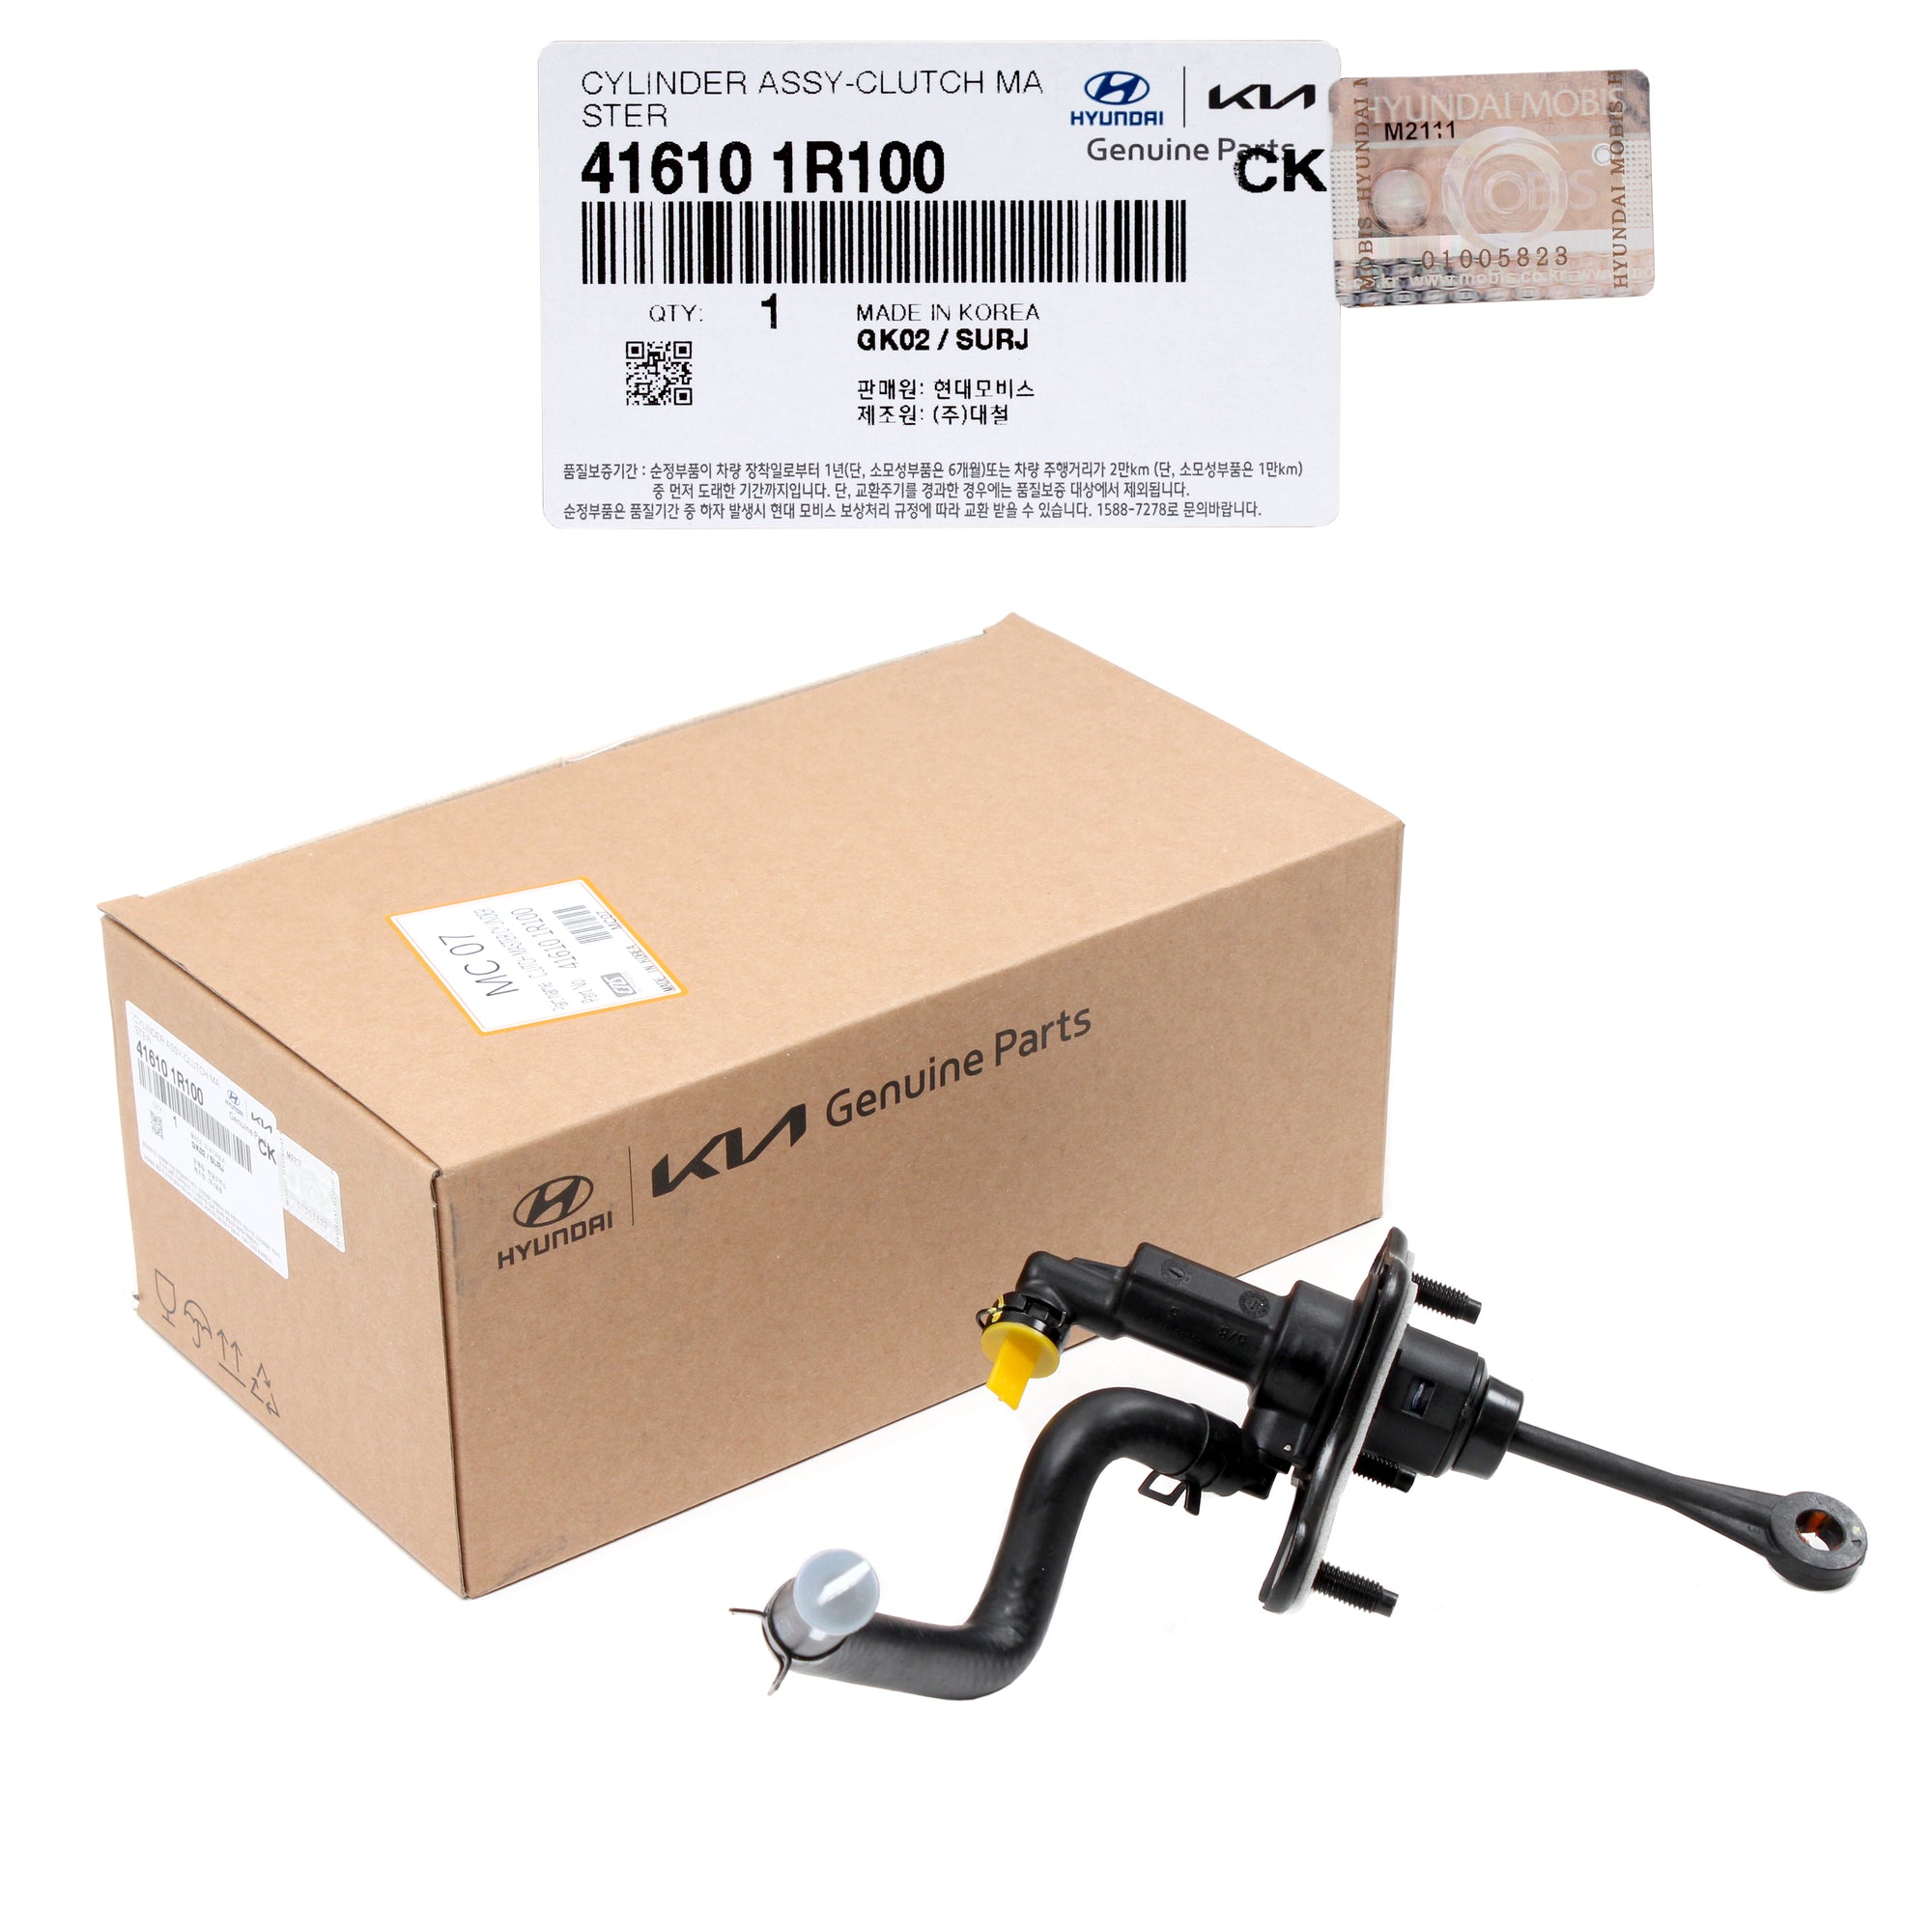 GENUINE Clutch Master Cylinder M/T for 12-17 Hyundai Accent Kia Rio 416101R100